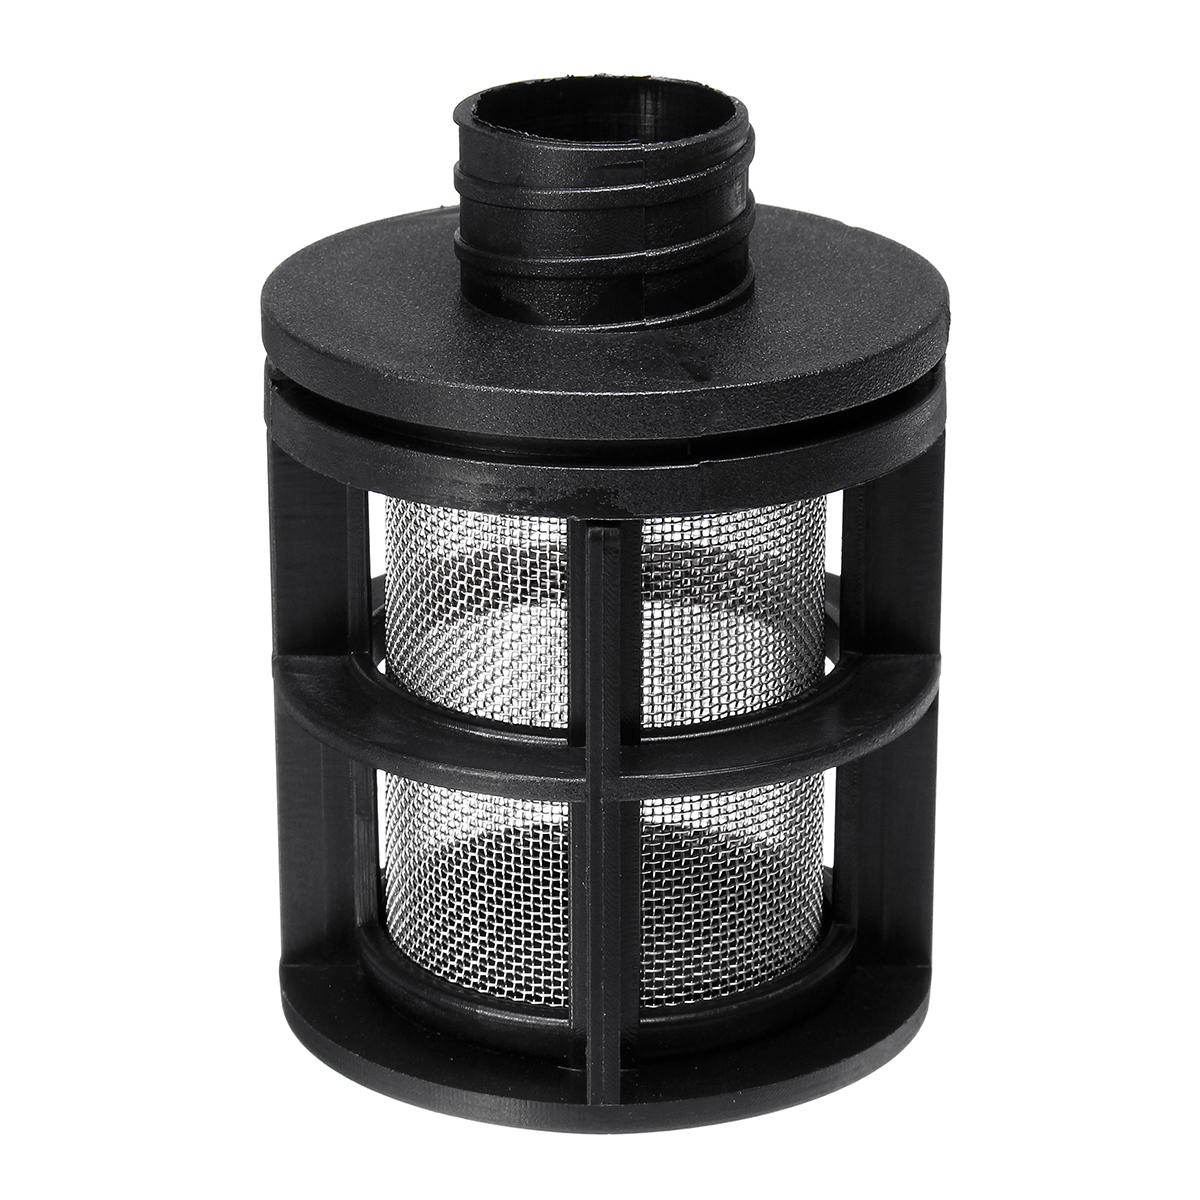 25mm-Air-Intake-Filter-Silencer-For-Dometic-Eberspacher-Webasto-Diesel-Heater-1409798-5